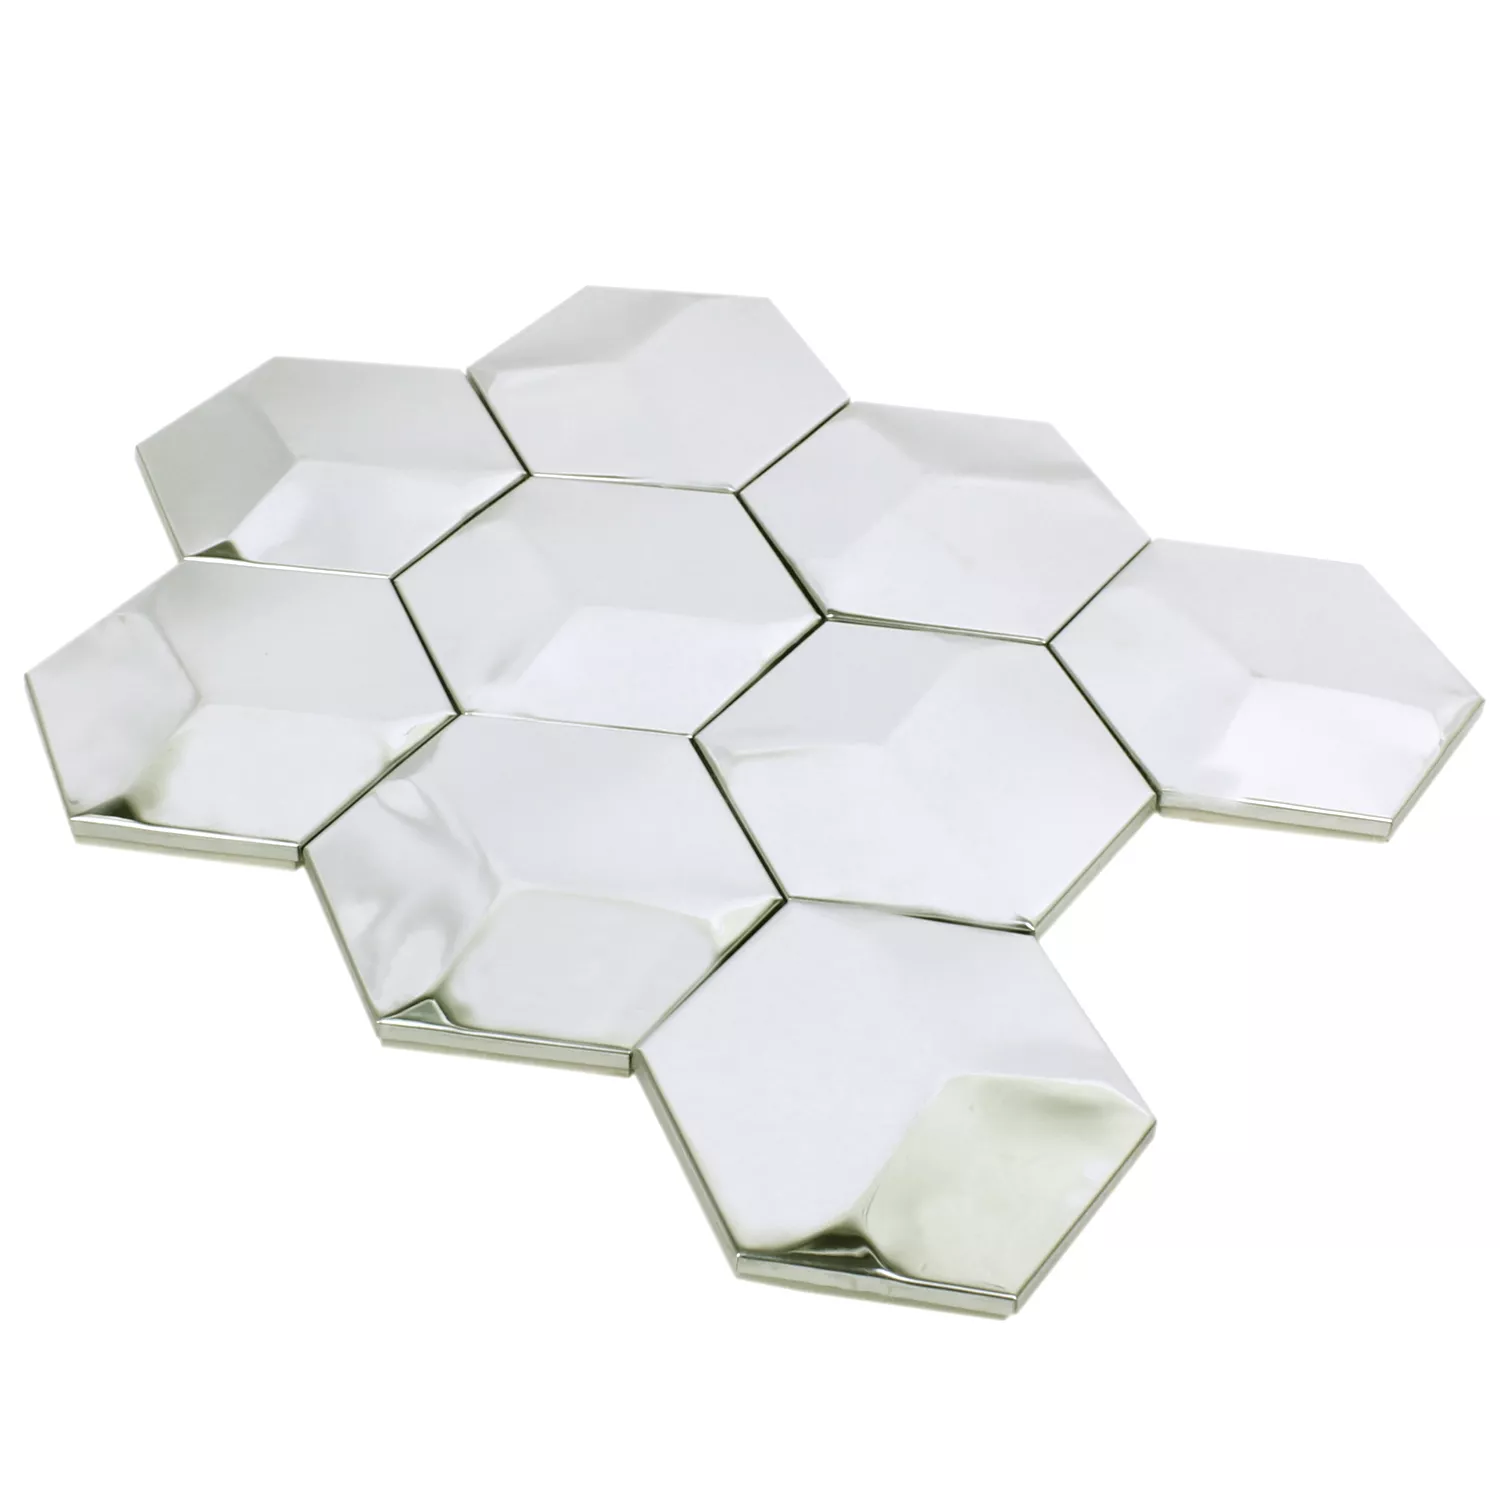 Sample Mosaic Tiles Stainless Steel Contender Hexagon Mat